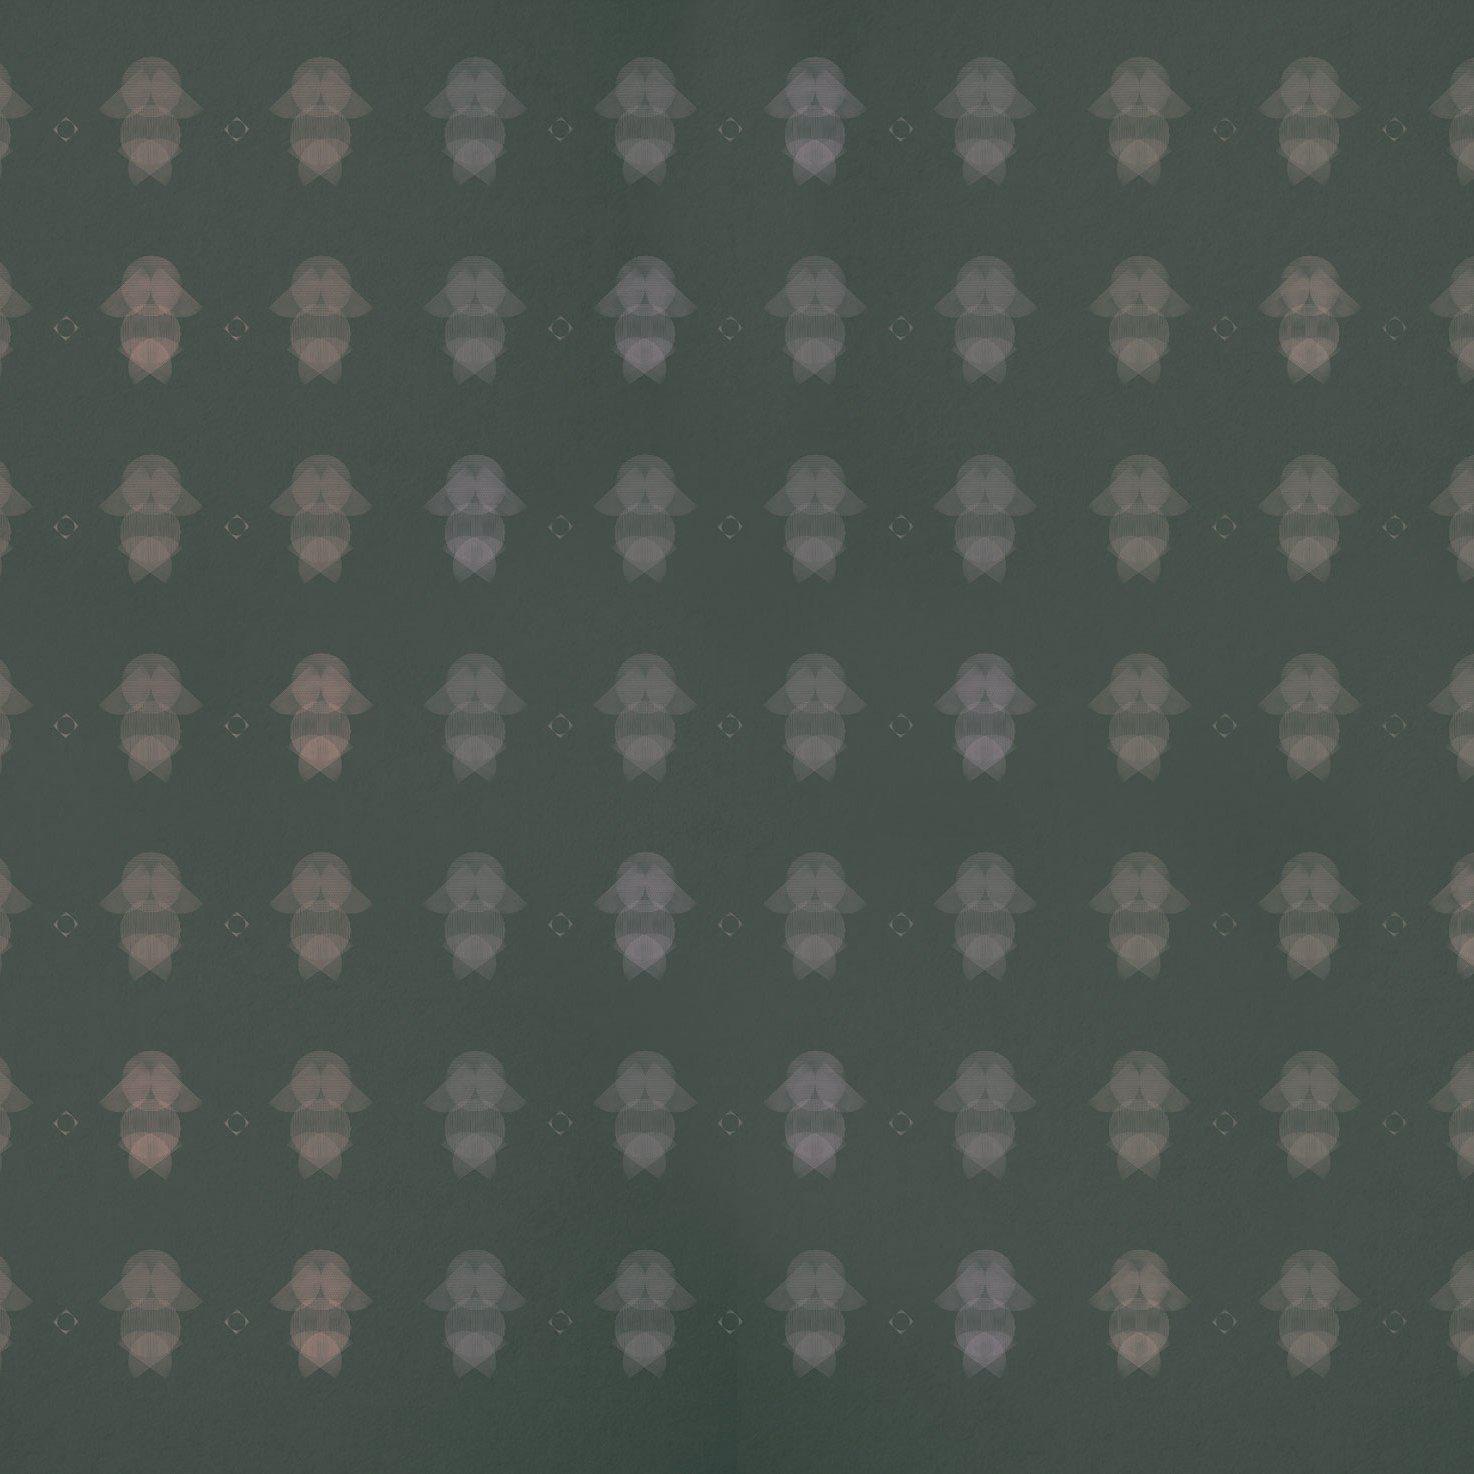 Stripes Ladybug-Digital Wallpaper-Tecnografica-Green 2-70874-2B